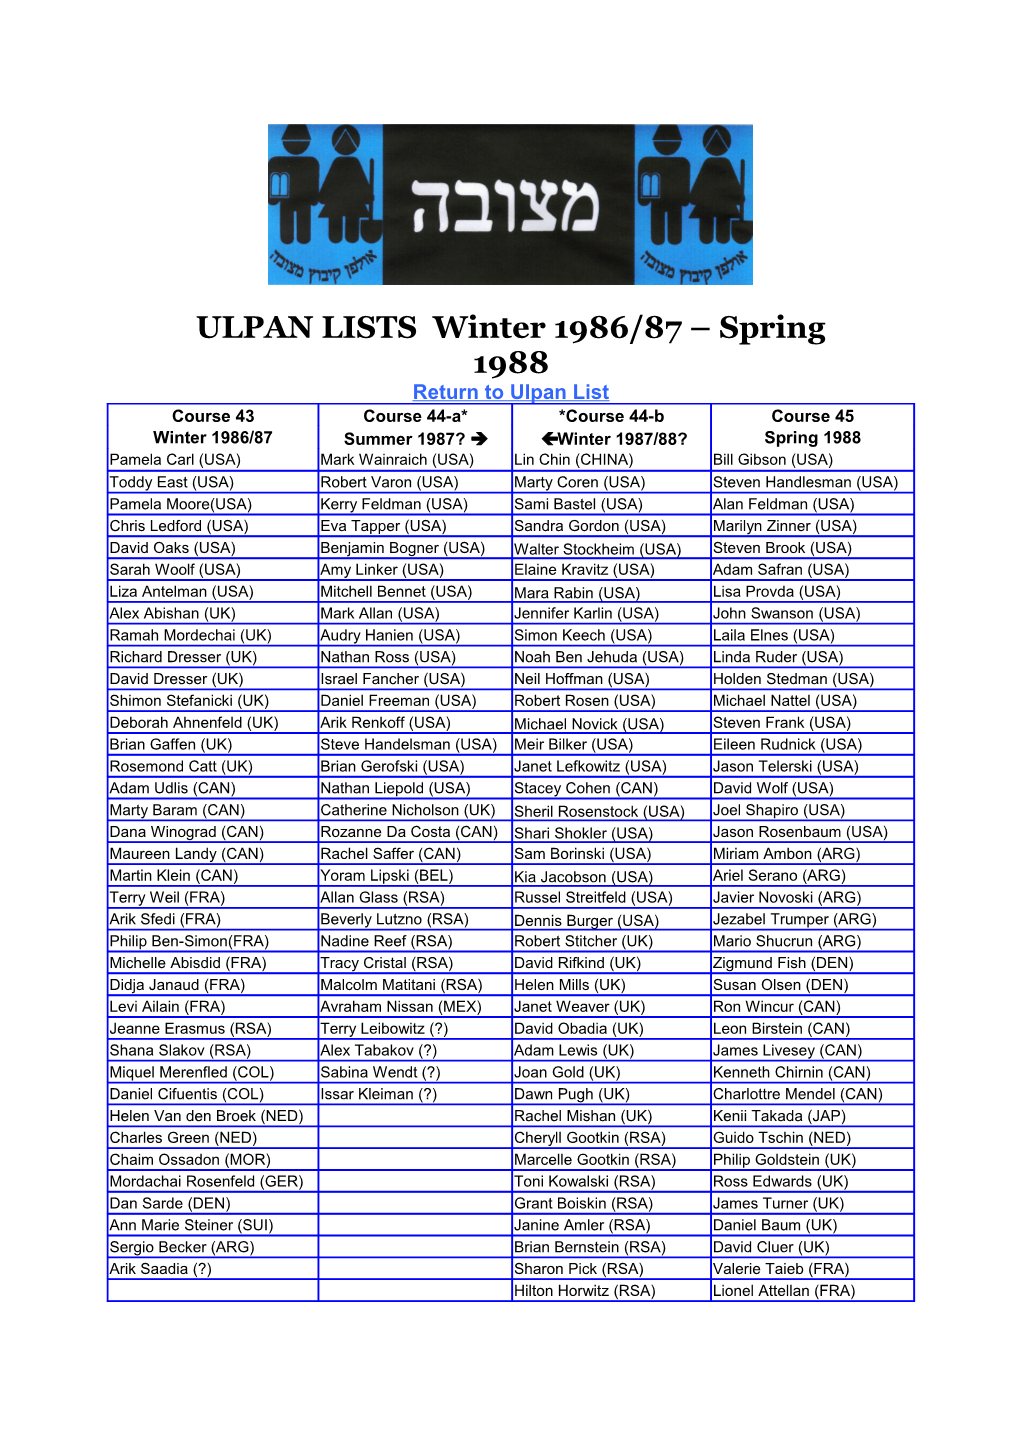 ULPAN LISTS Winter 1986/87 Spring 1988